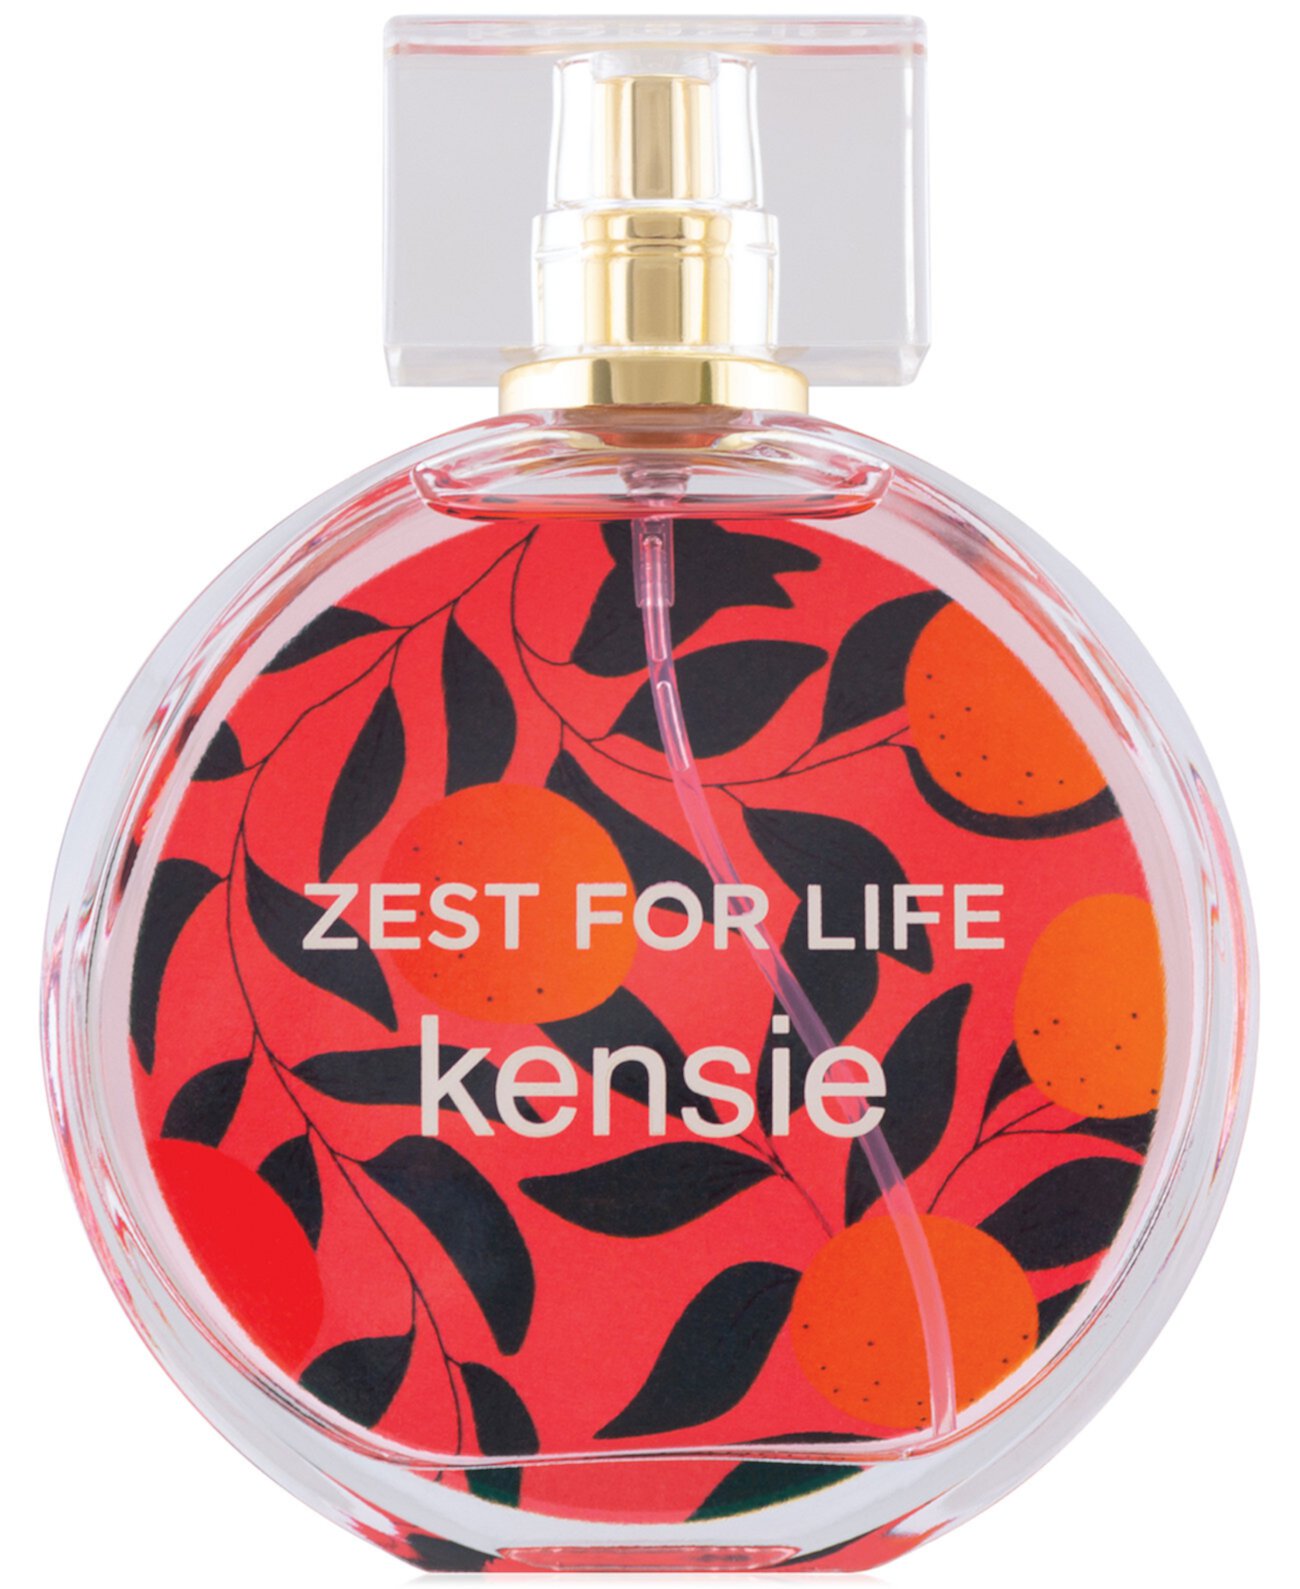 Zest For Life, 3.4 oz. Kensie